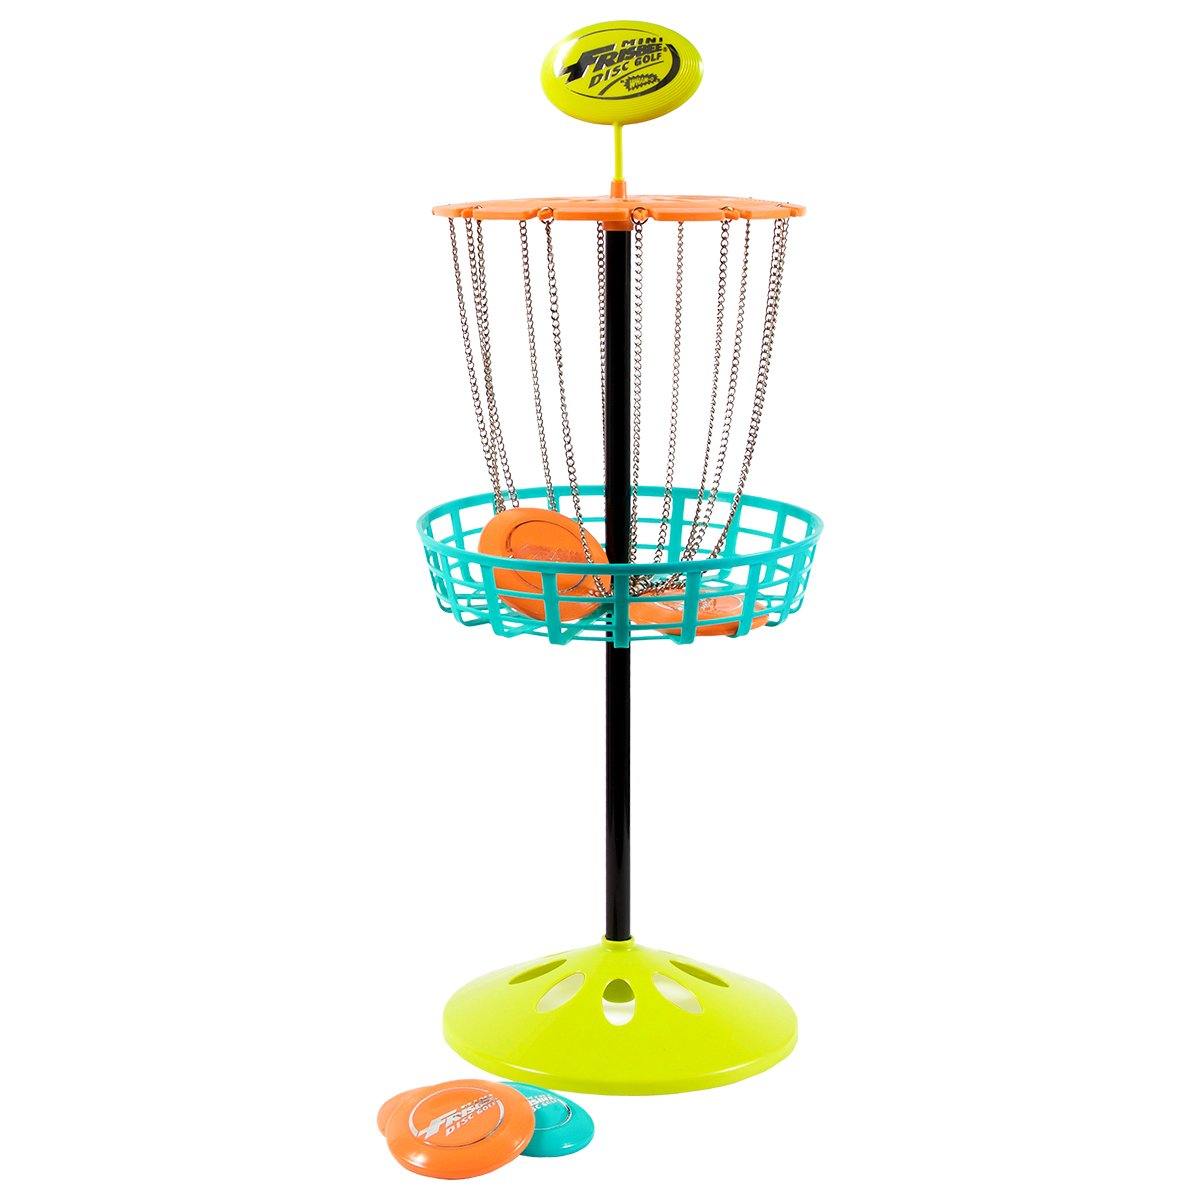 Frisbee® Mini Golf Set